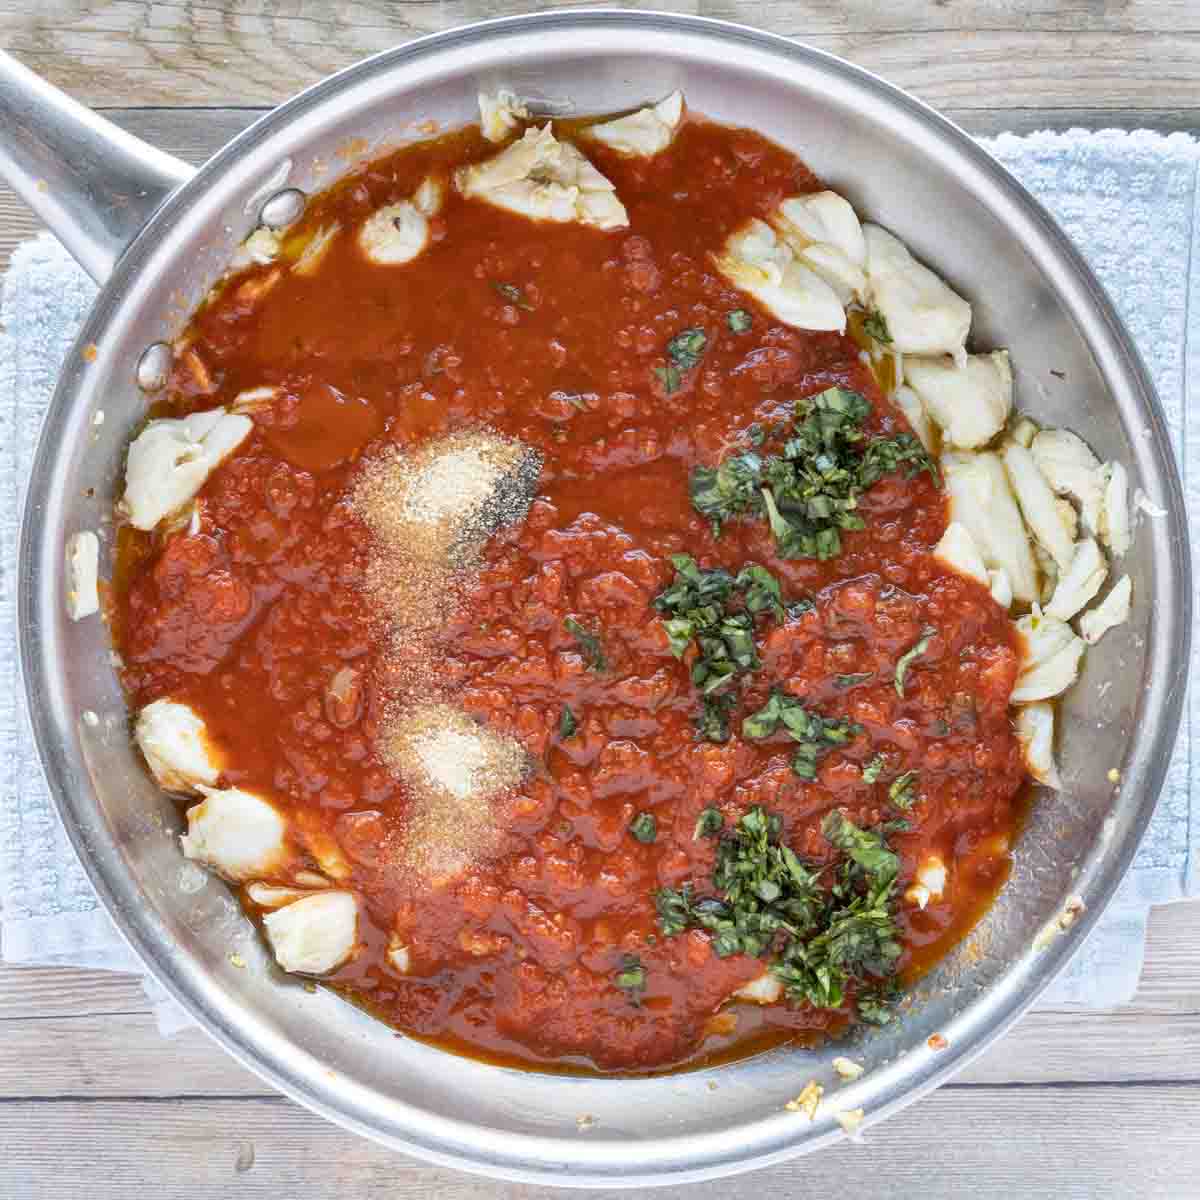 tomato sauce and seasonings added to saute pan.